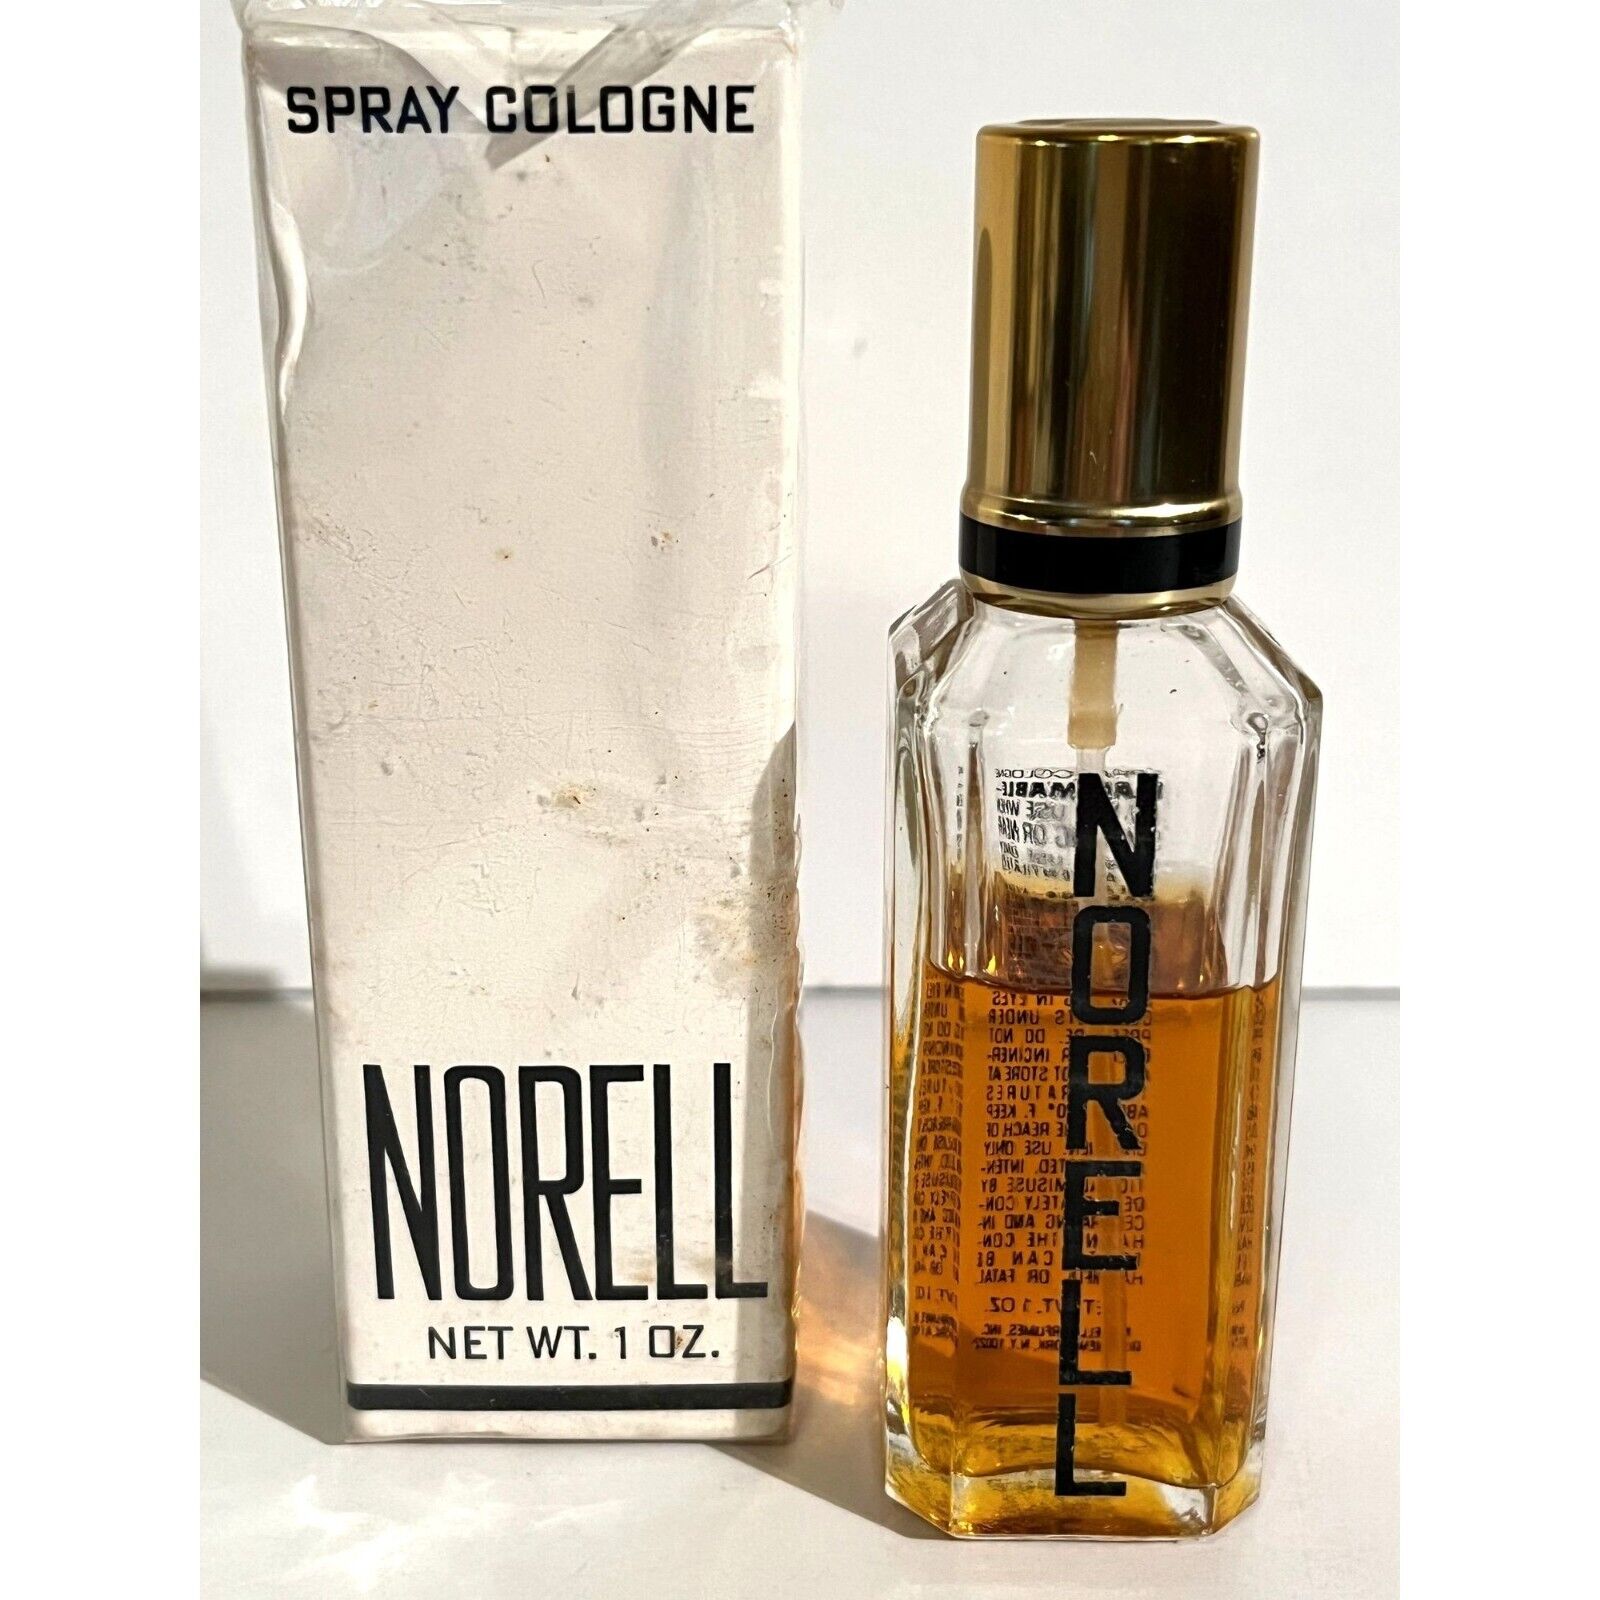 Vintage NORELL Spray Cologne Perfume 75% Full READ DESCRIPTION